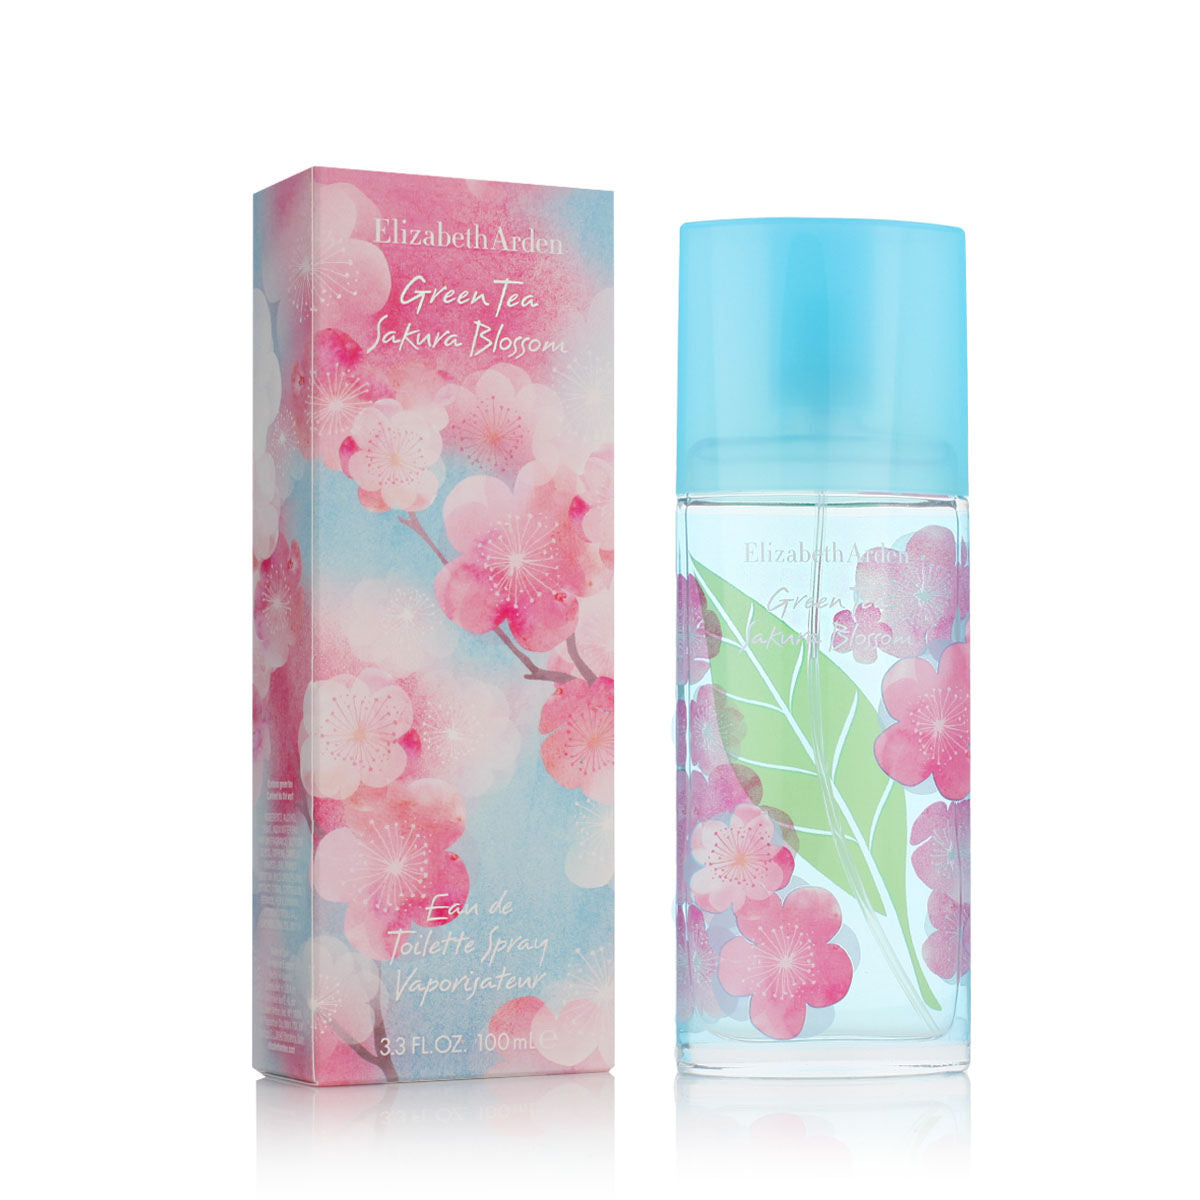 Women's Perfume Elizabeth Arden EDT Green Tea Sakura Blossom 100 ml-0